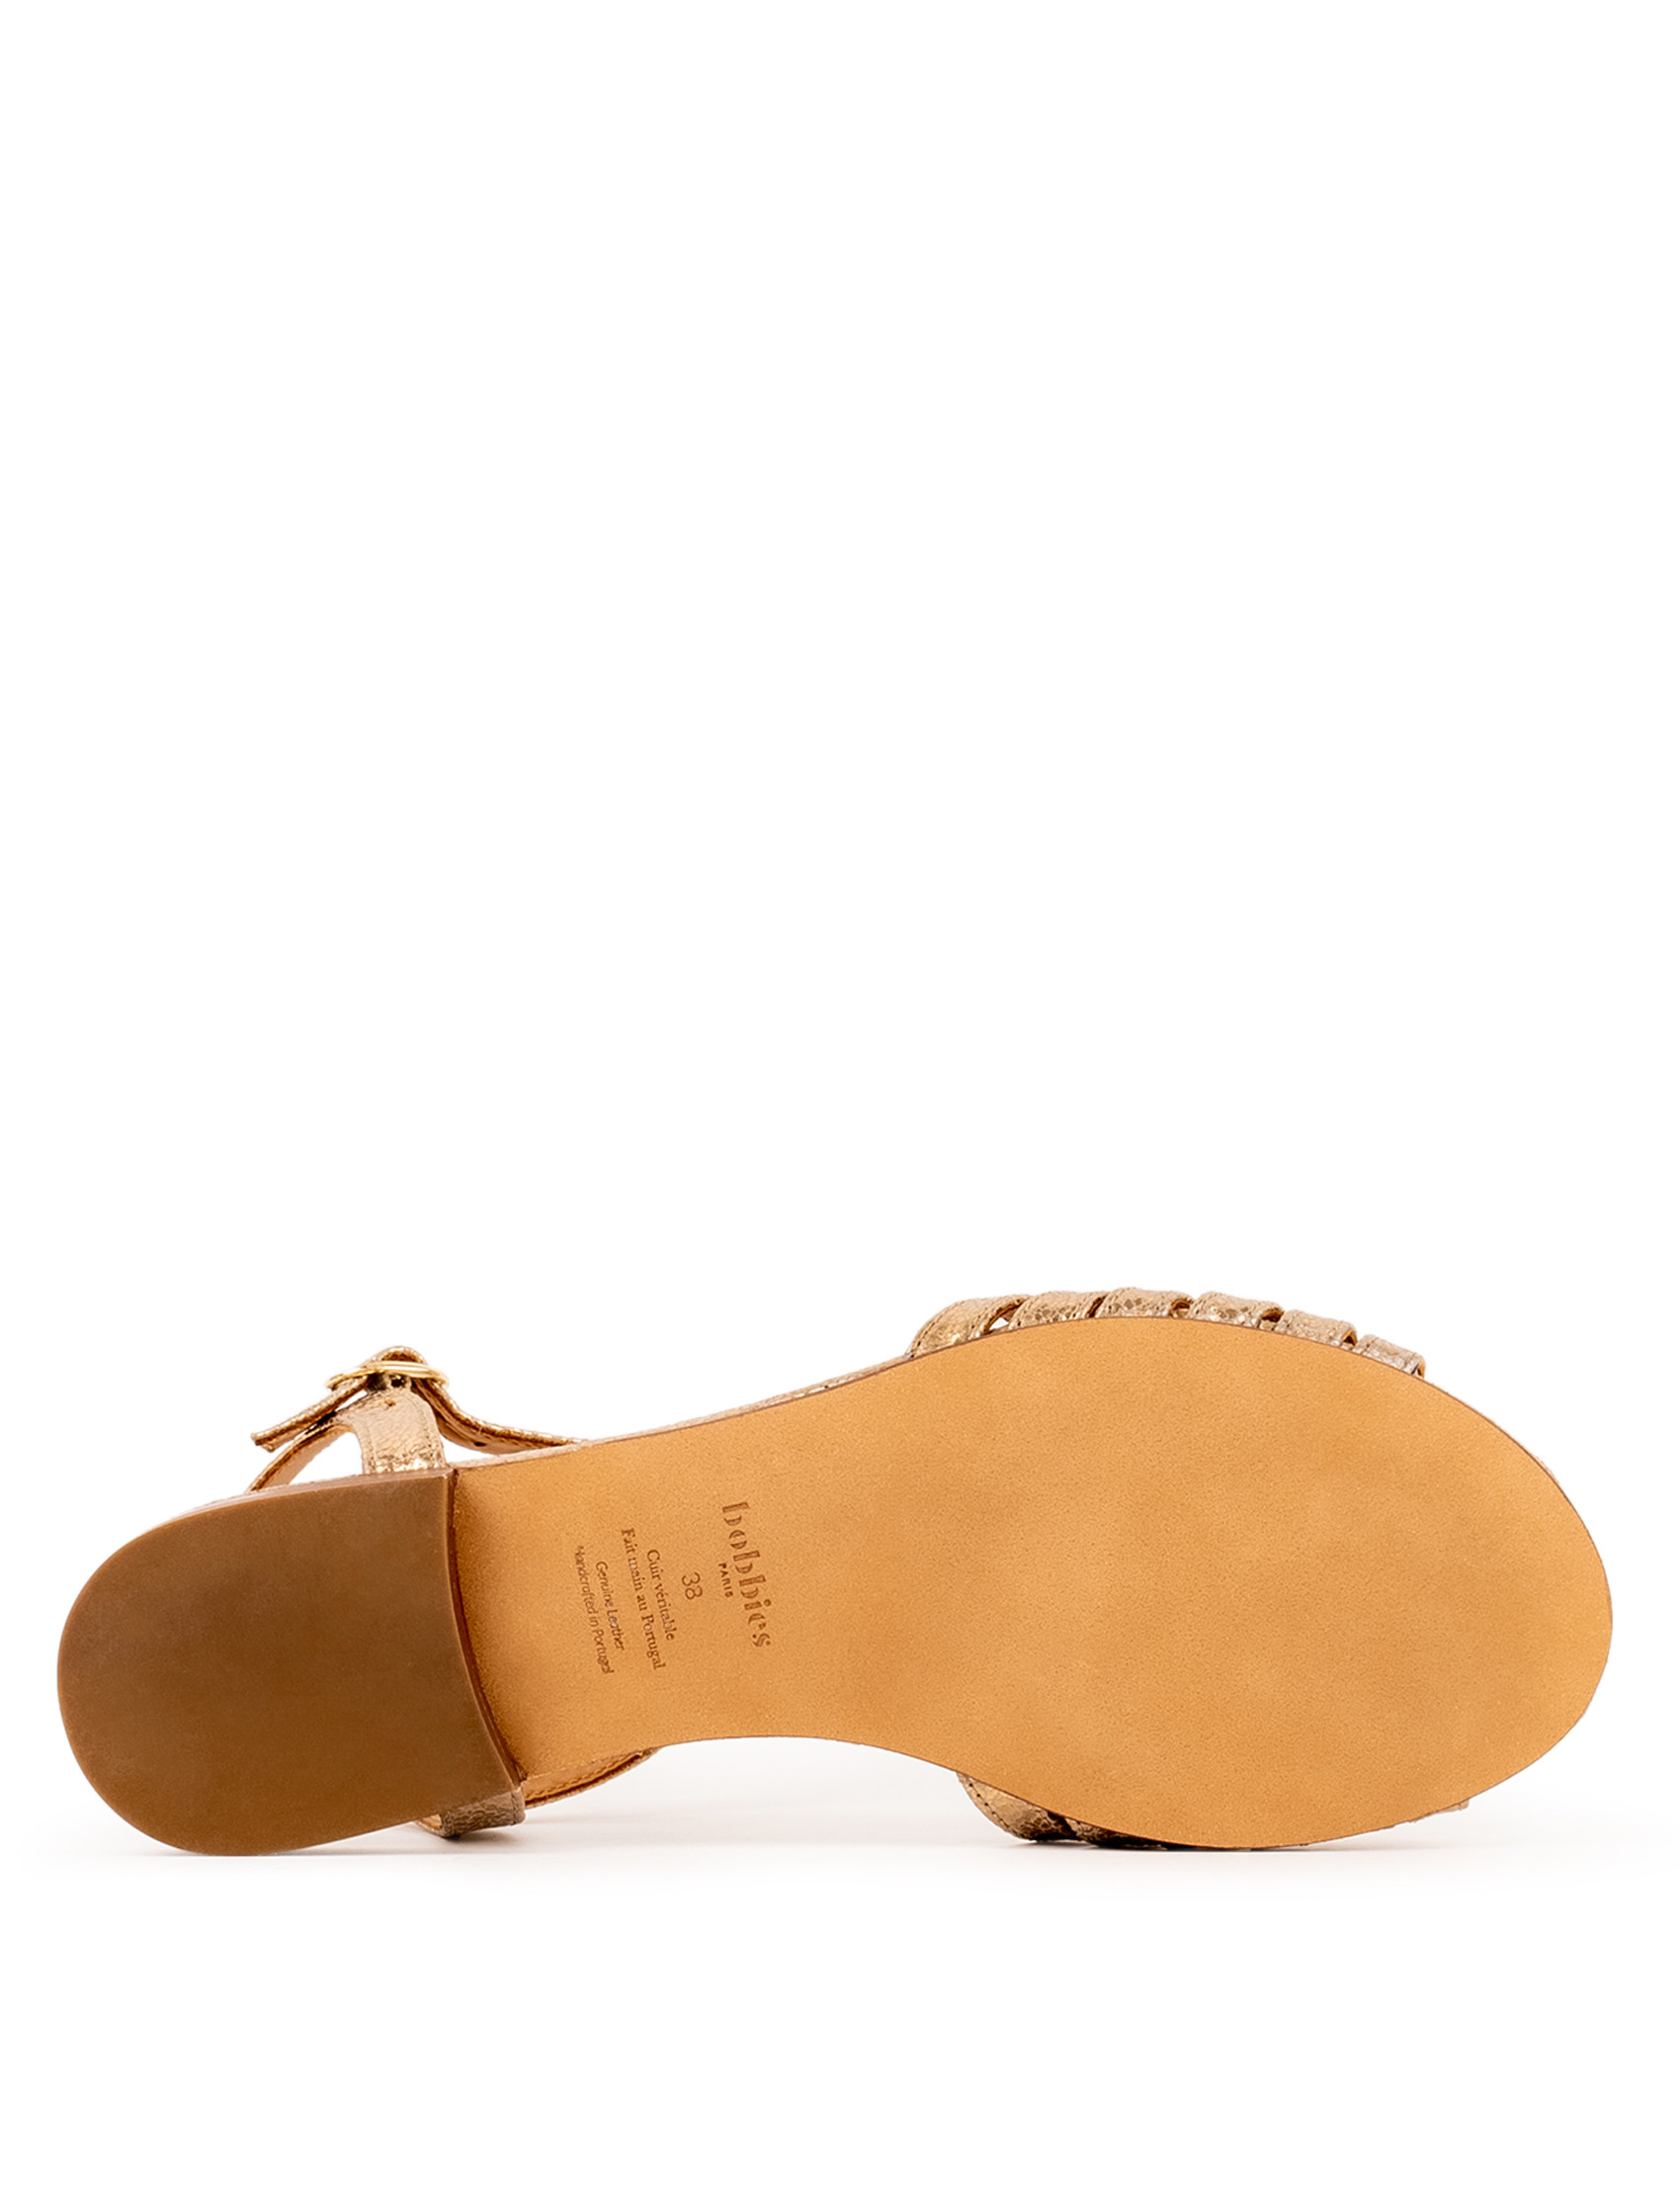 Flat Sandals Gaby - Sepia Gold - Women - Bobbies